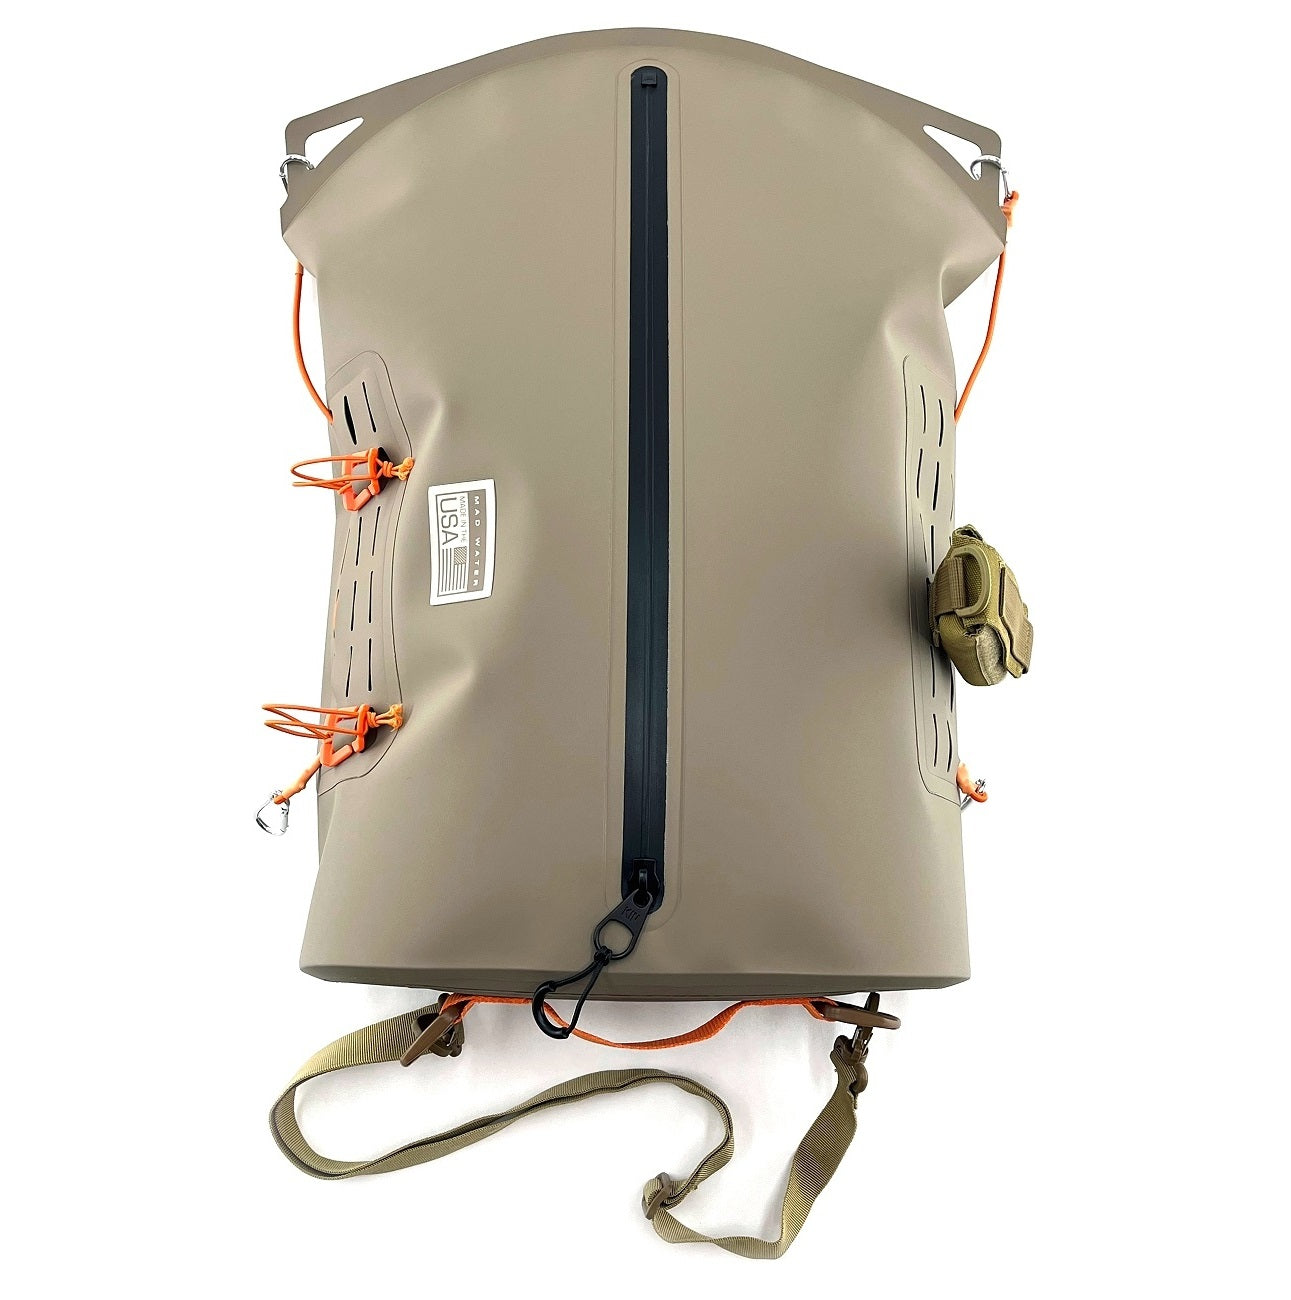 waterproof deck bag - top view - for kayak or paddleboard use